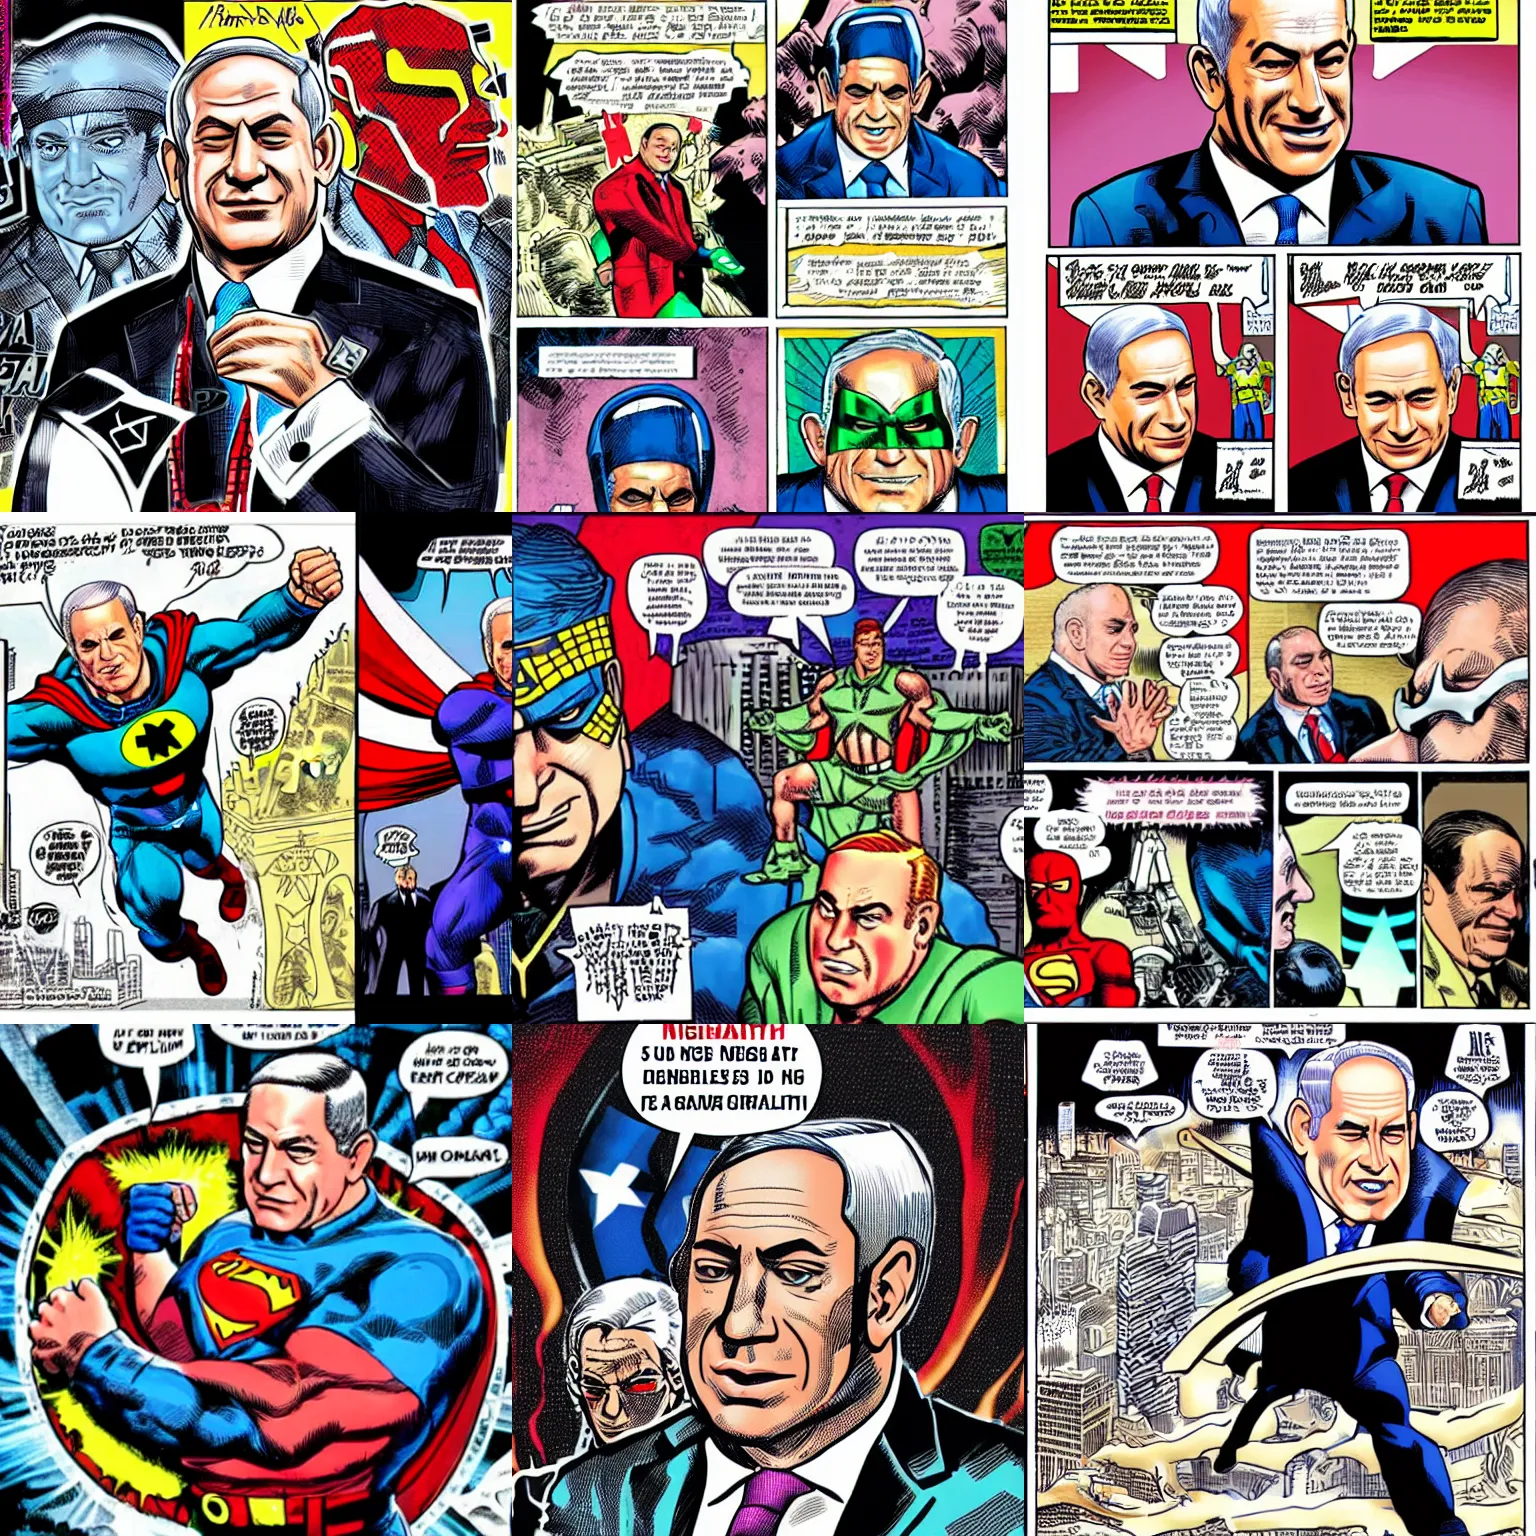 Prompt: Benjamin Netanyahu as a money-themed superhero, by Jim Lee, Jack Kirby, highly detailed